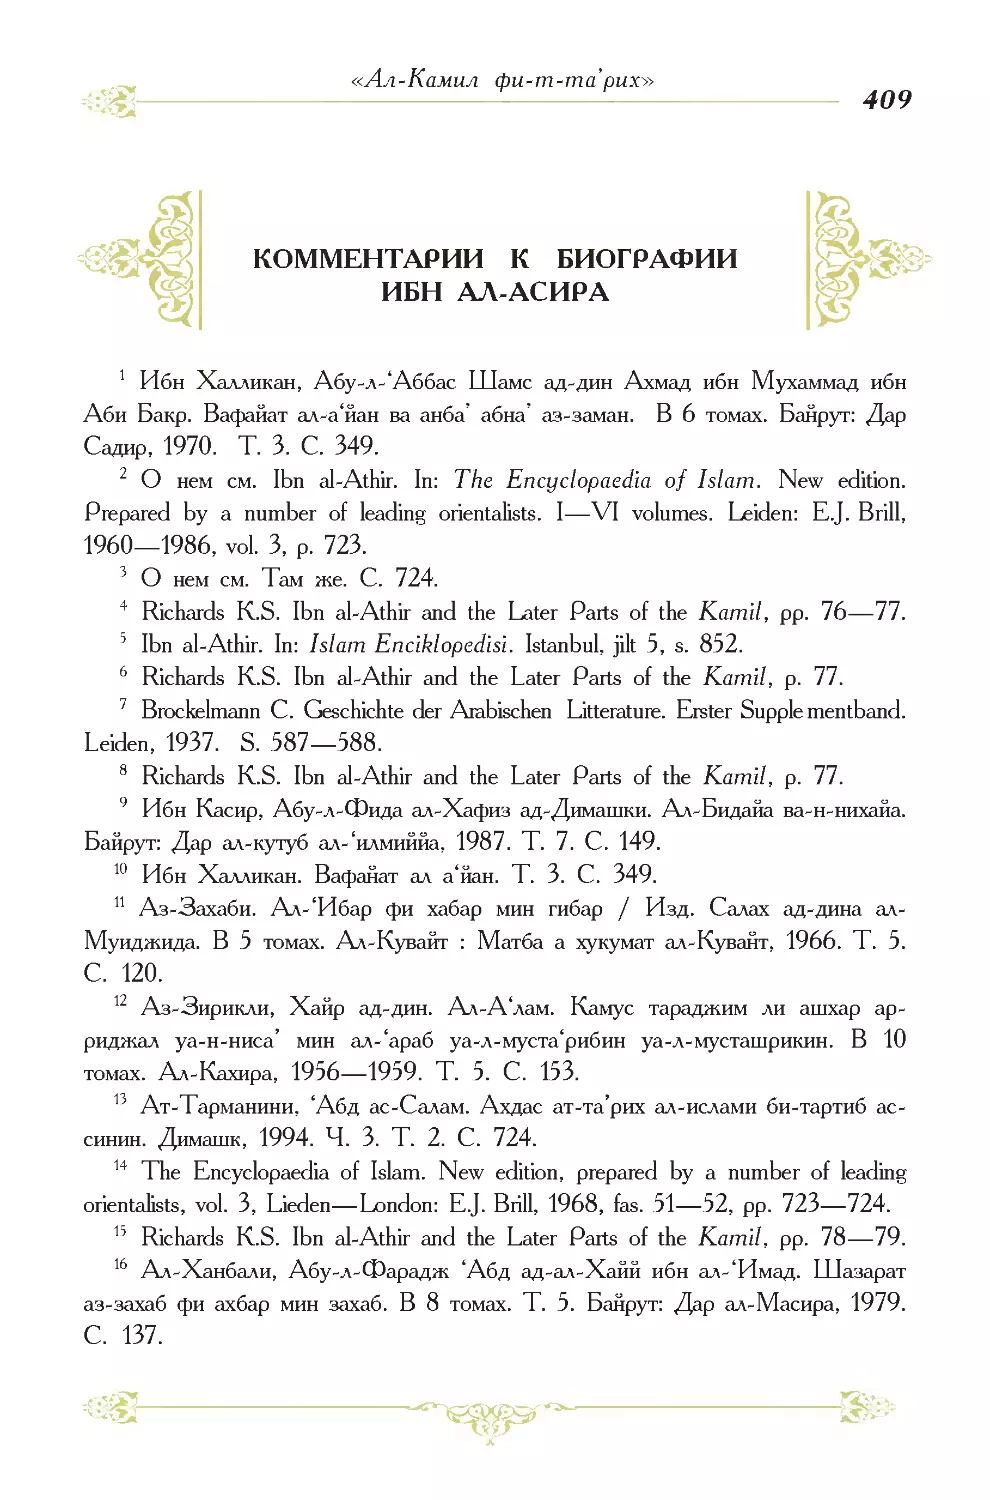 Комментарии к биографии Ибн ал-Асира